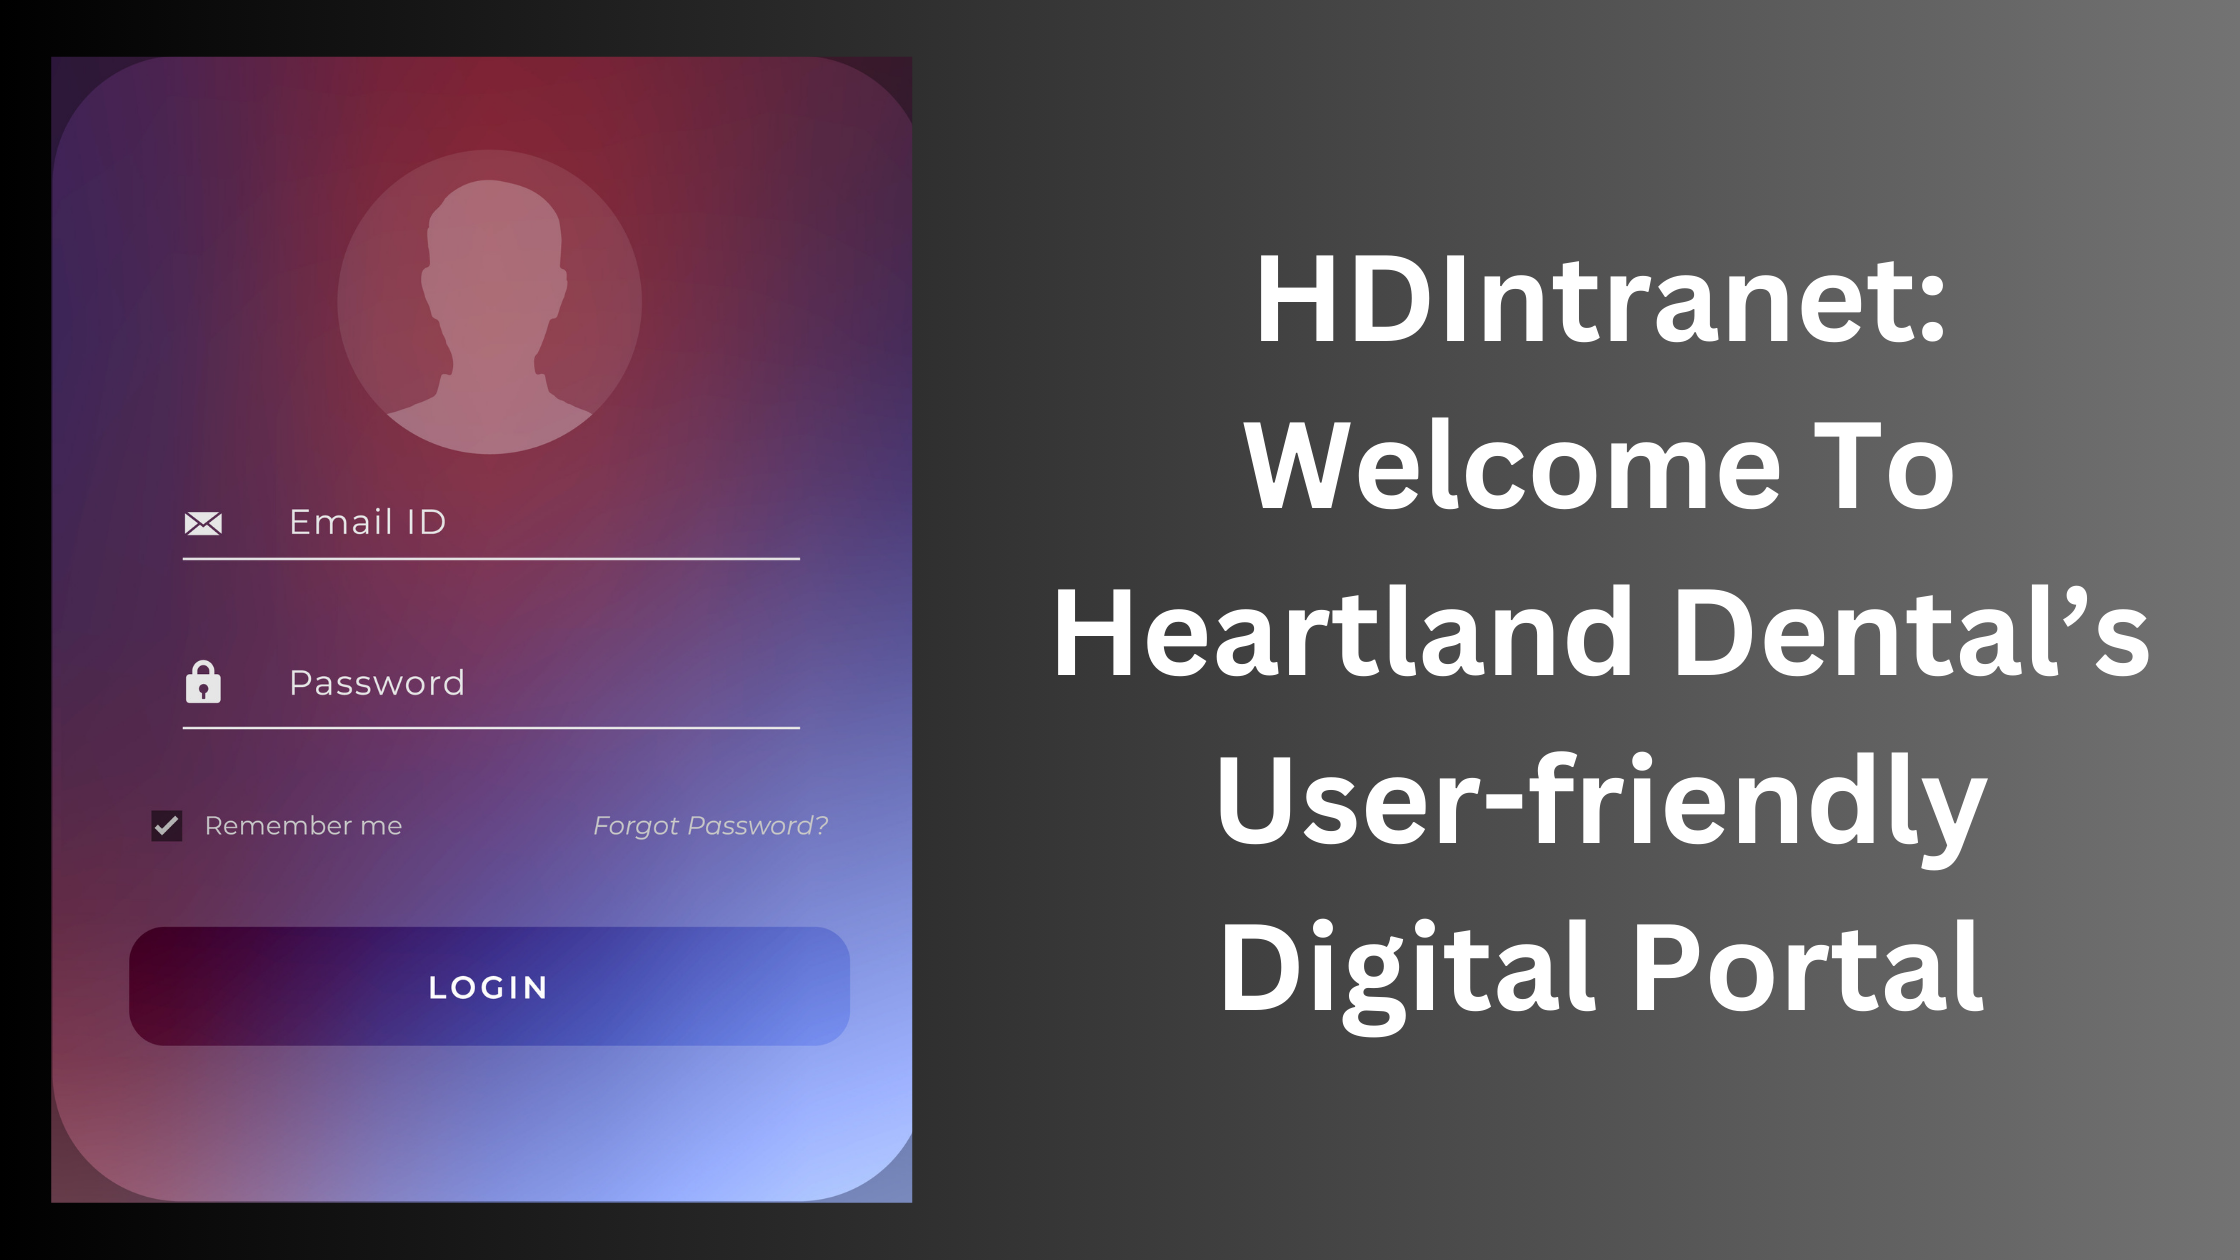 HDIntranet: Welcome To Heartland Dental’s User-friendly Digital Portal